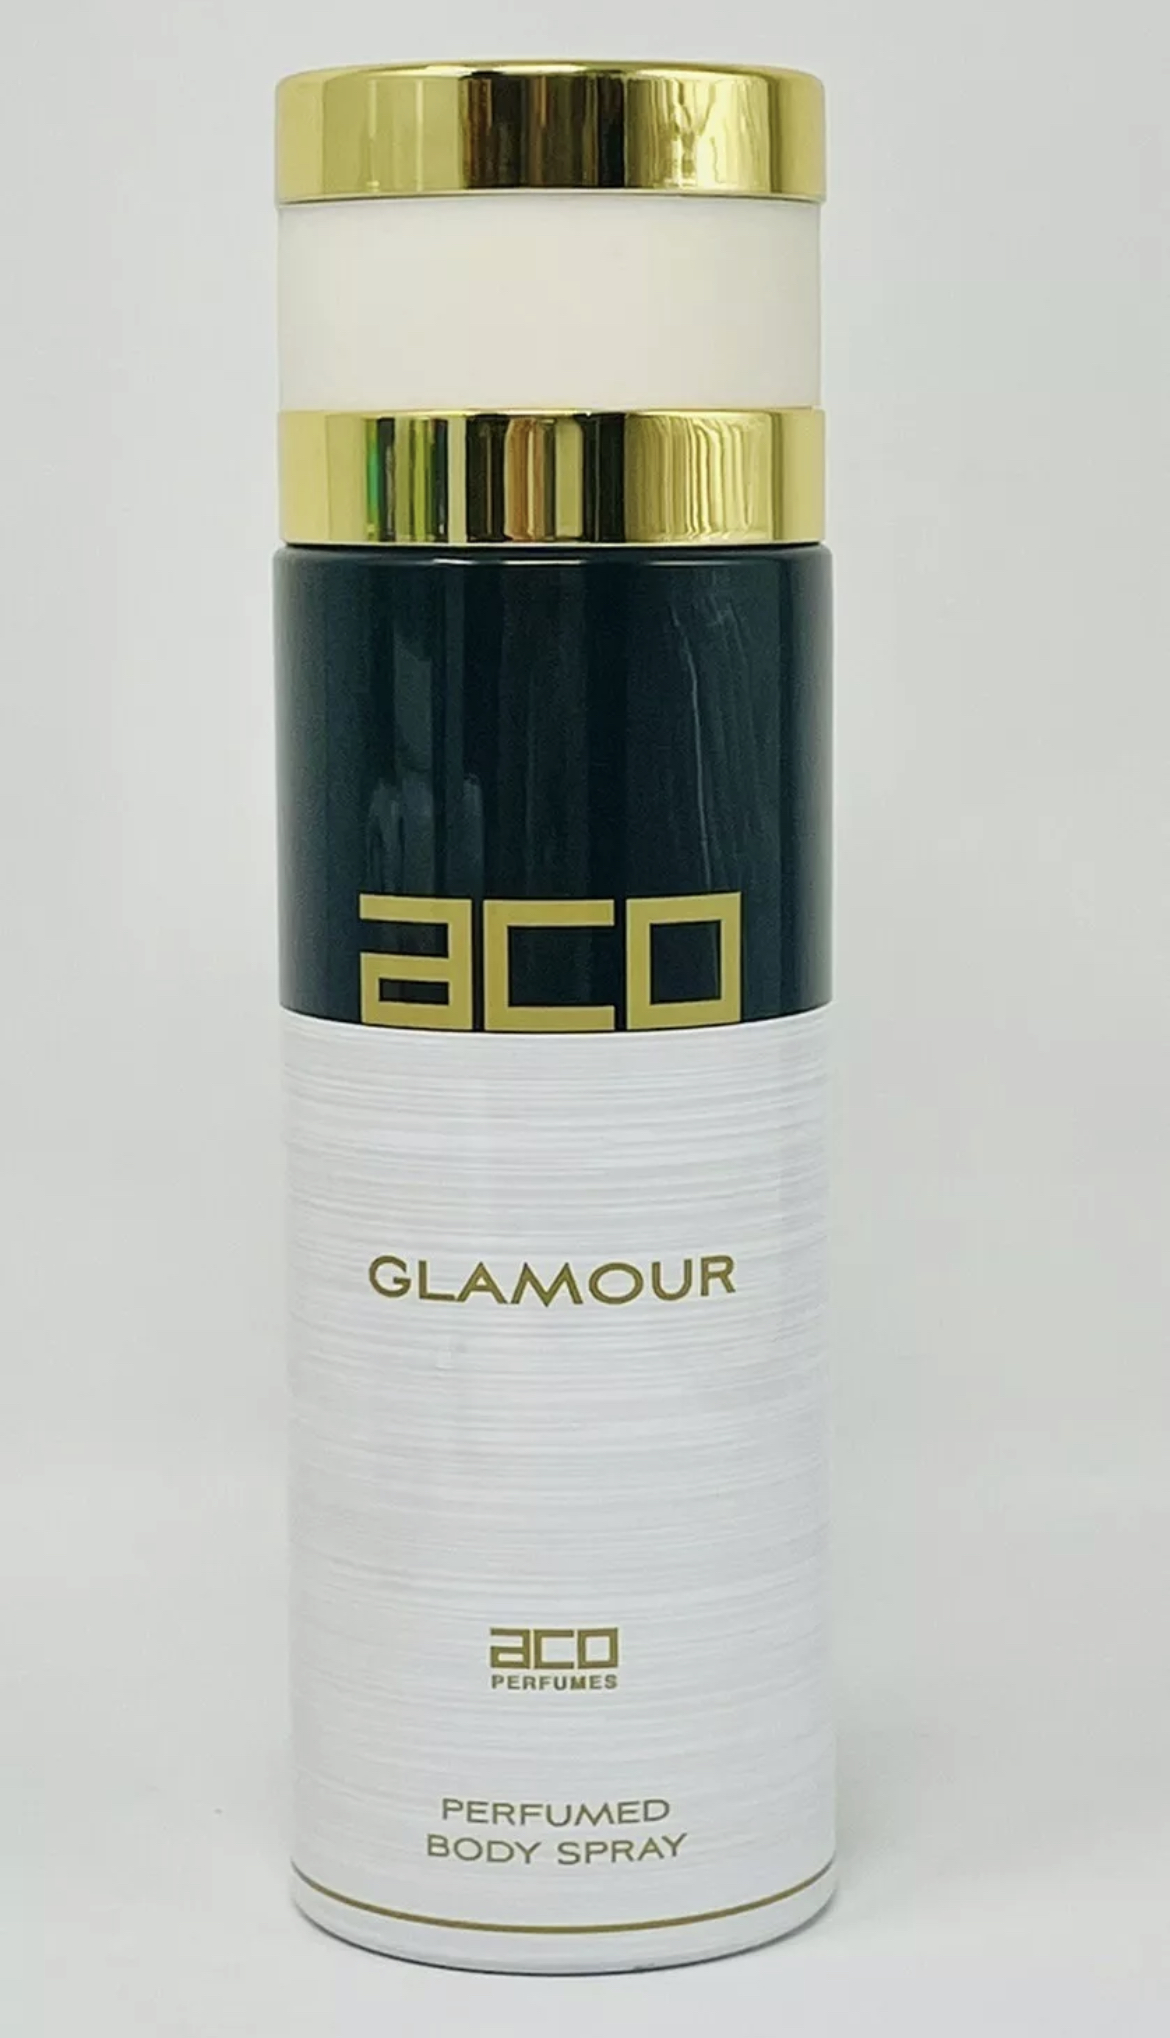 aco GLAMOUR perfumer Body spray 200 ml Expired 2025 made in U.A.E - image 1 of 1